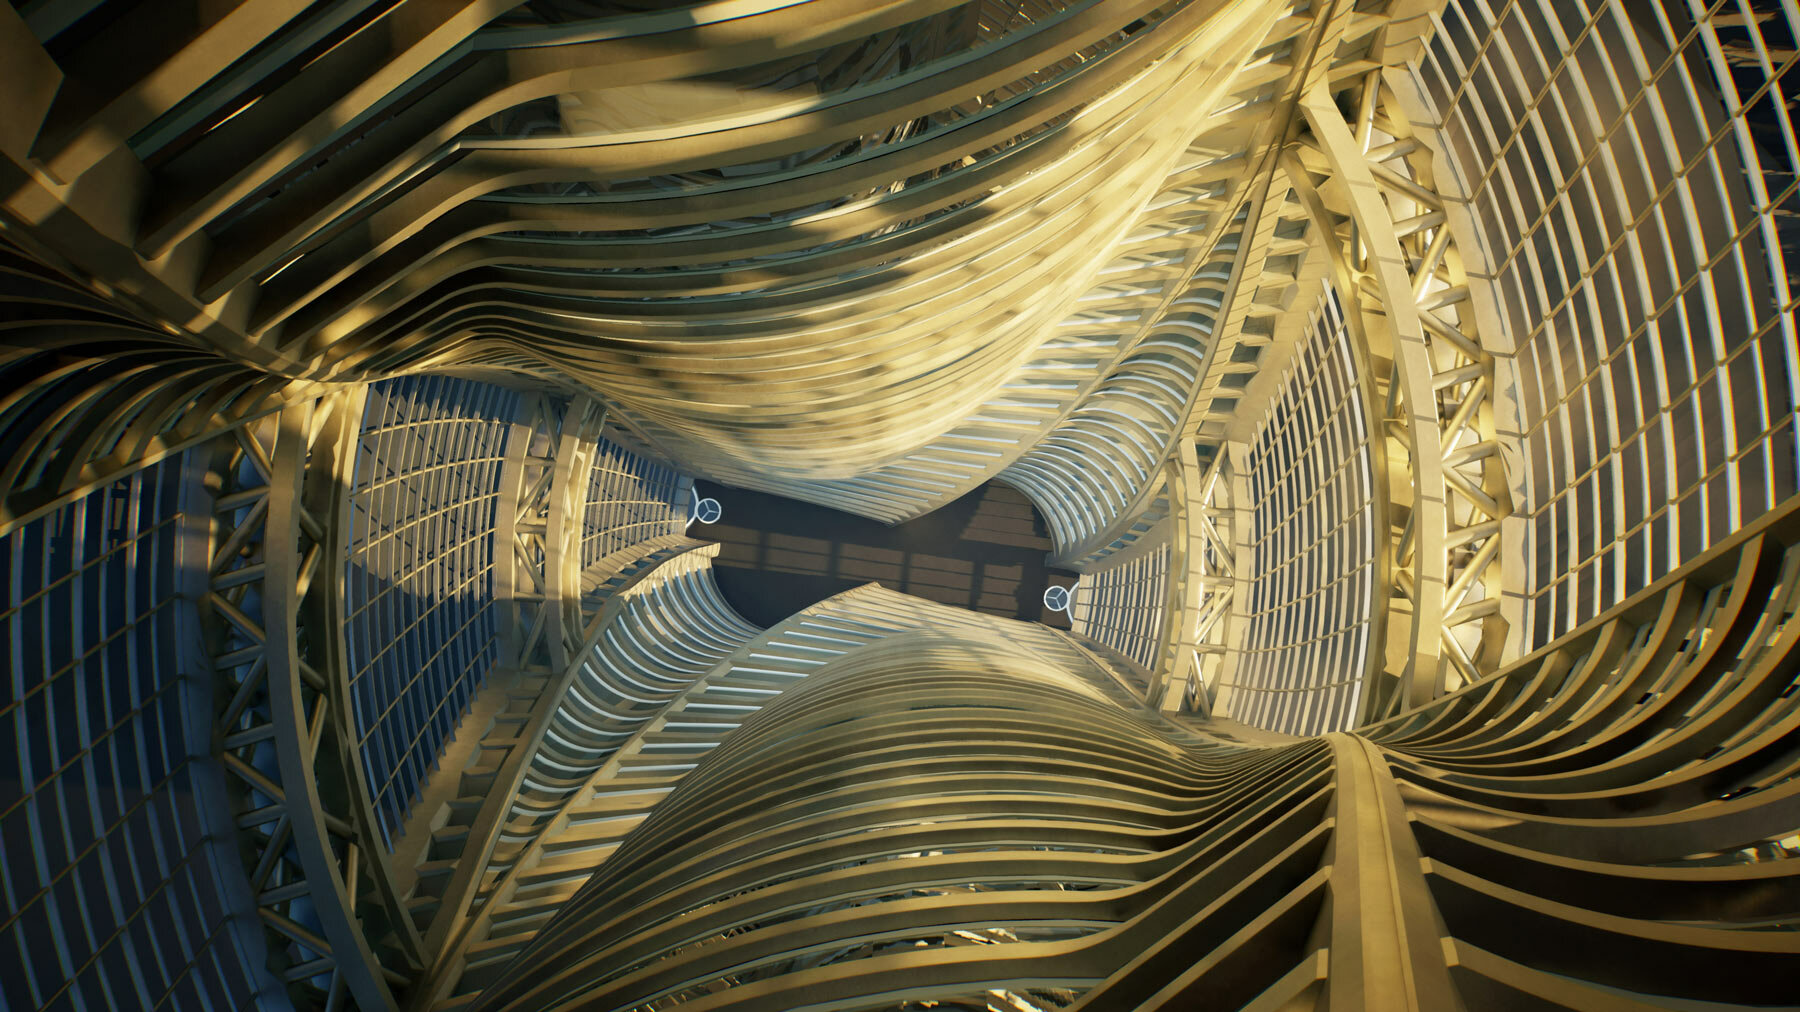 Metrotopia - a metaverse project by Zaha Hadid architects